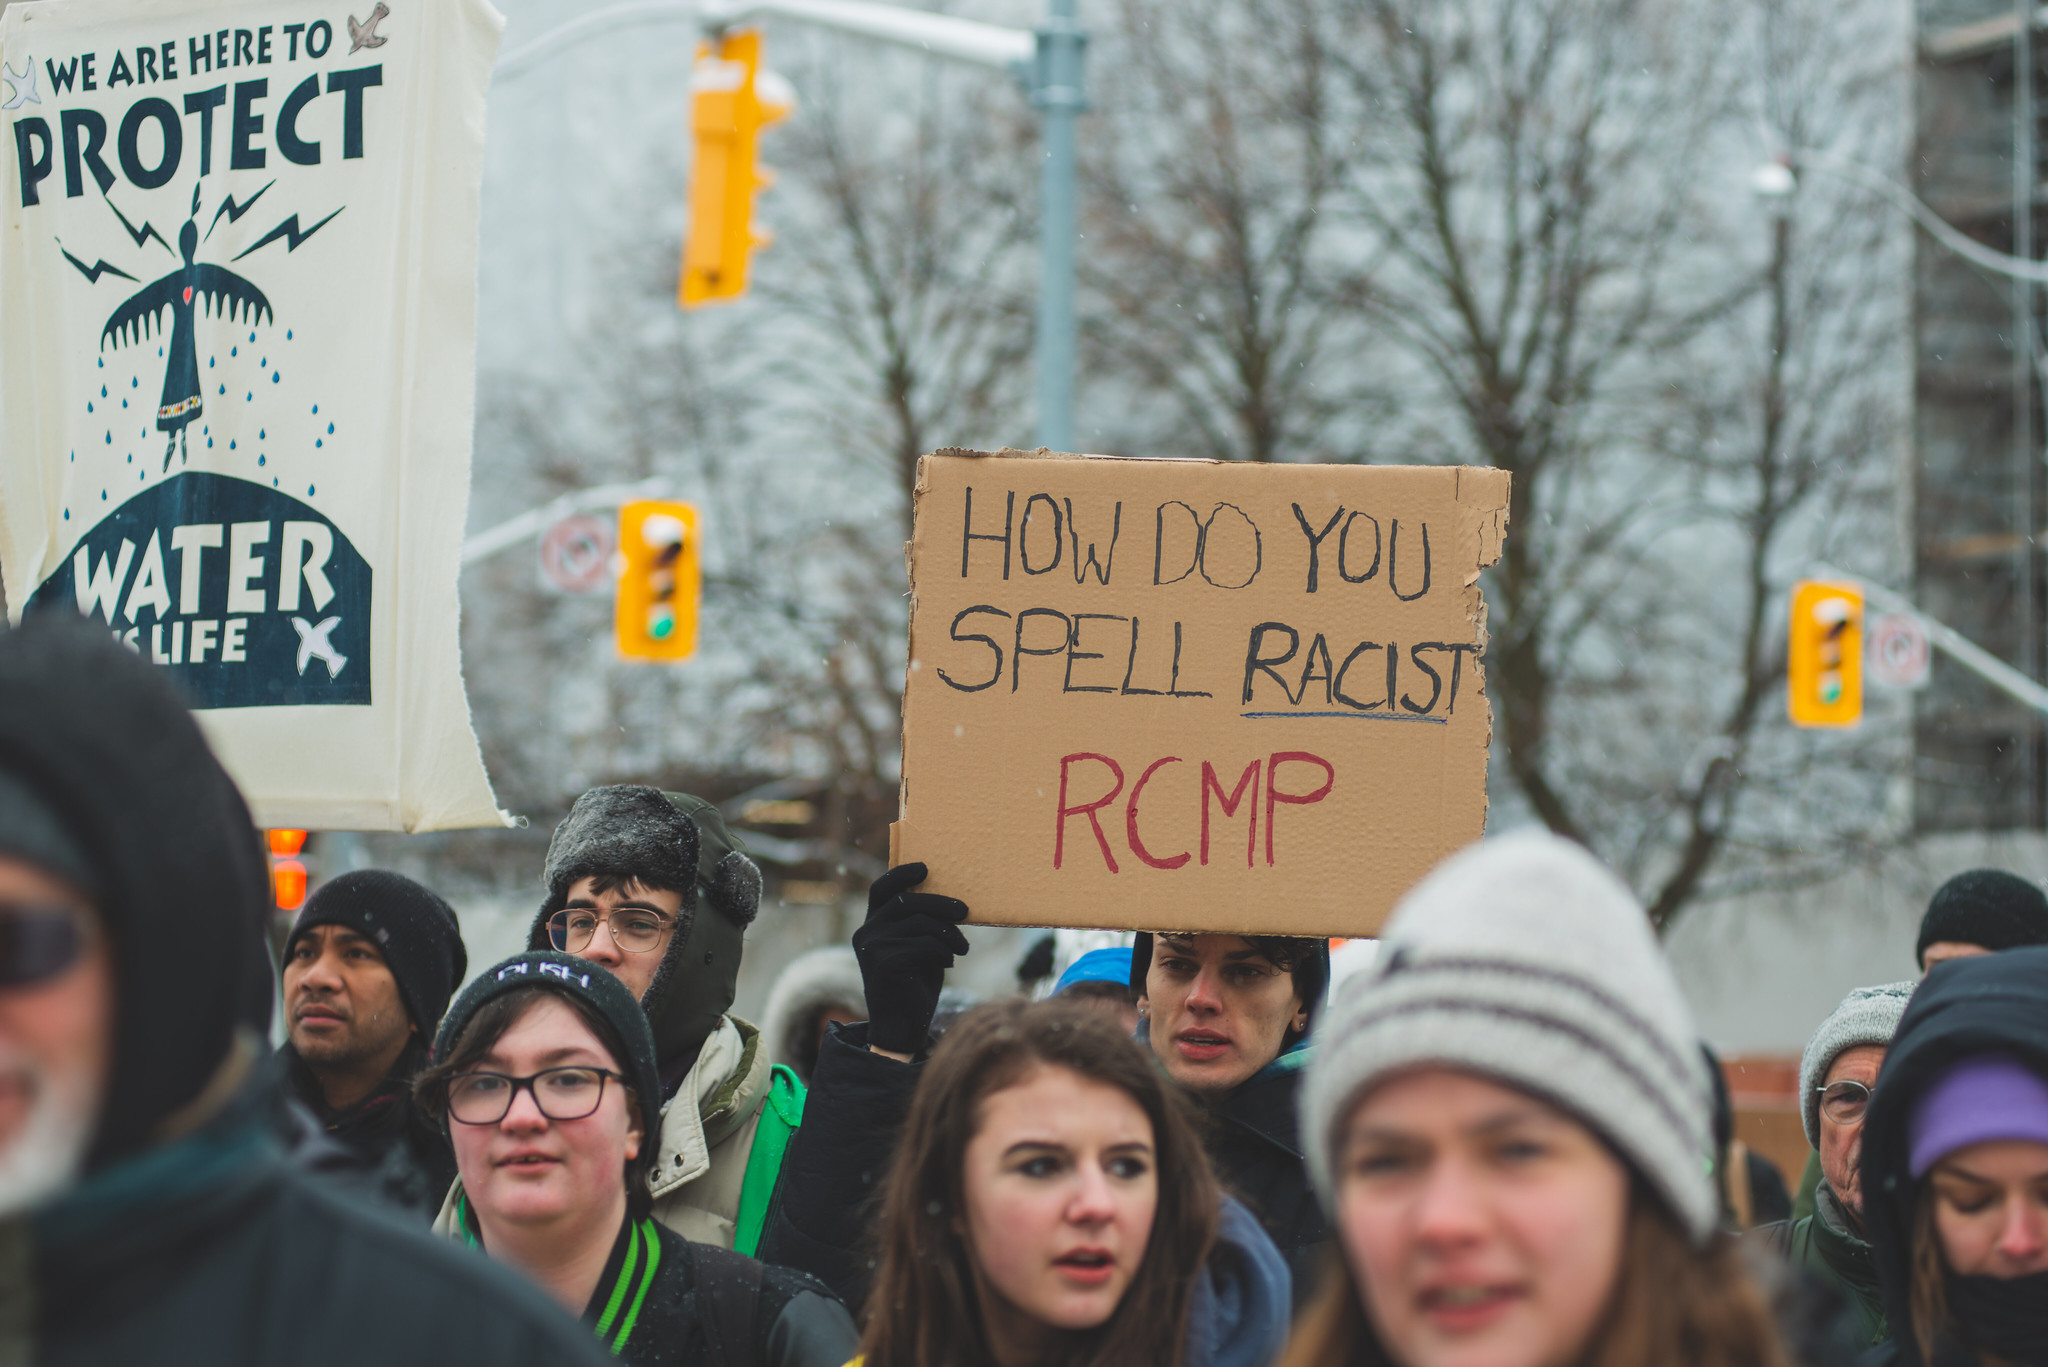 RCMP racist Image Jason Hargrove Flickr